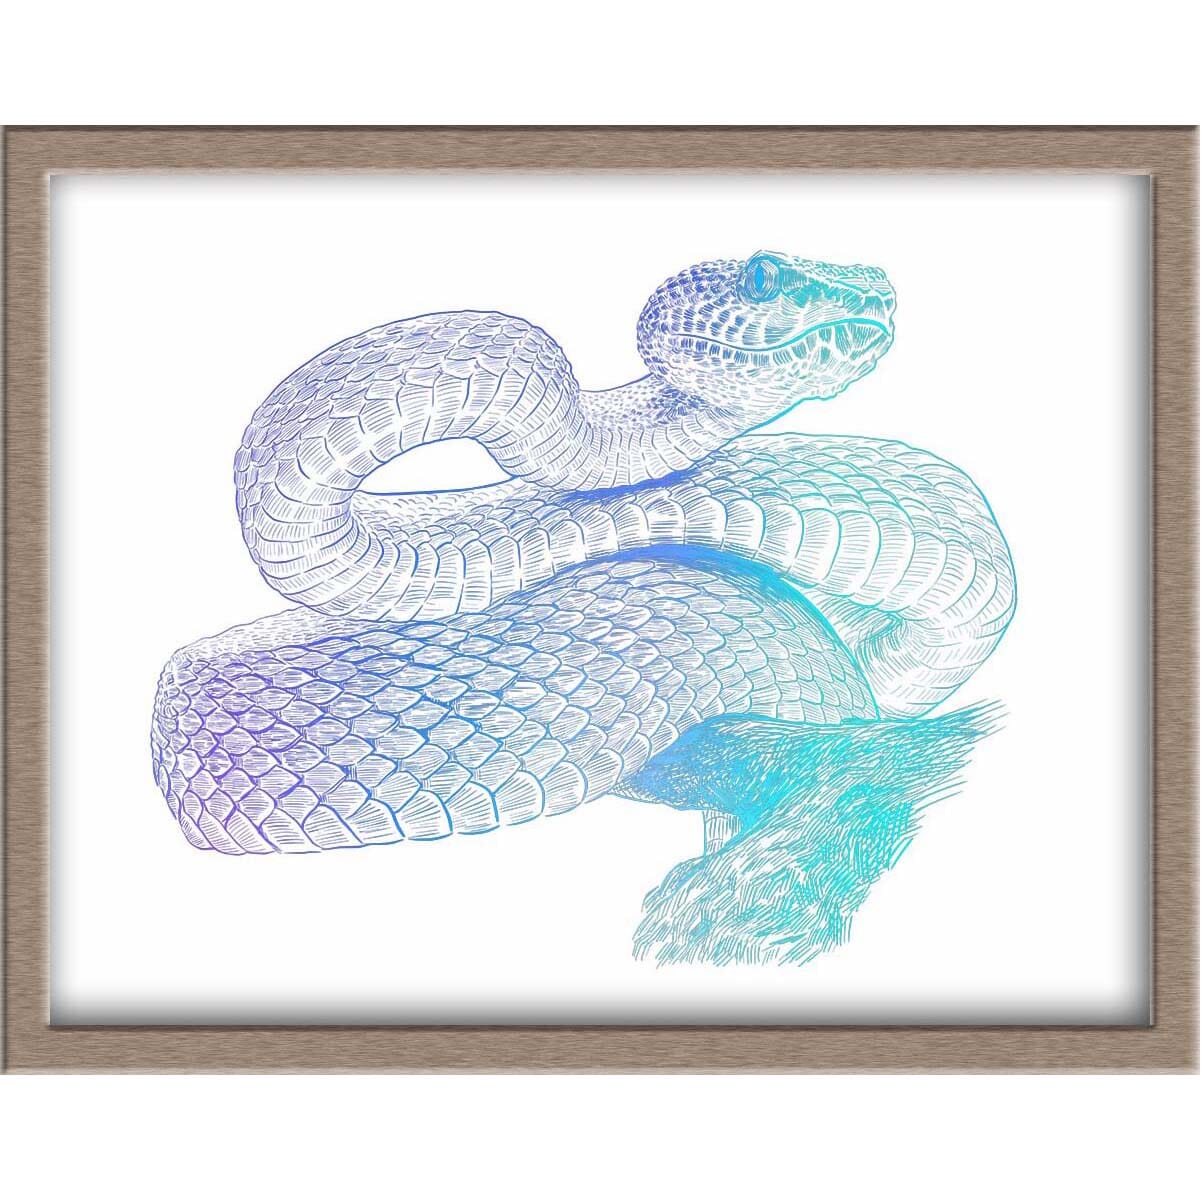 Snake Foiled Print Posters, Prints, & Visual Artwork JoyousJoyfulJoyness 